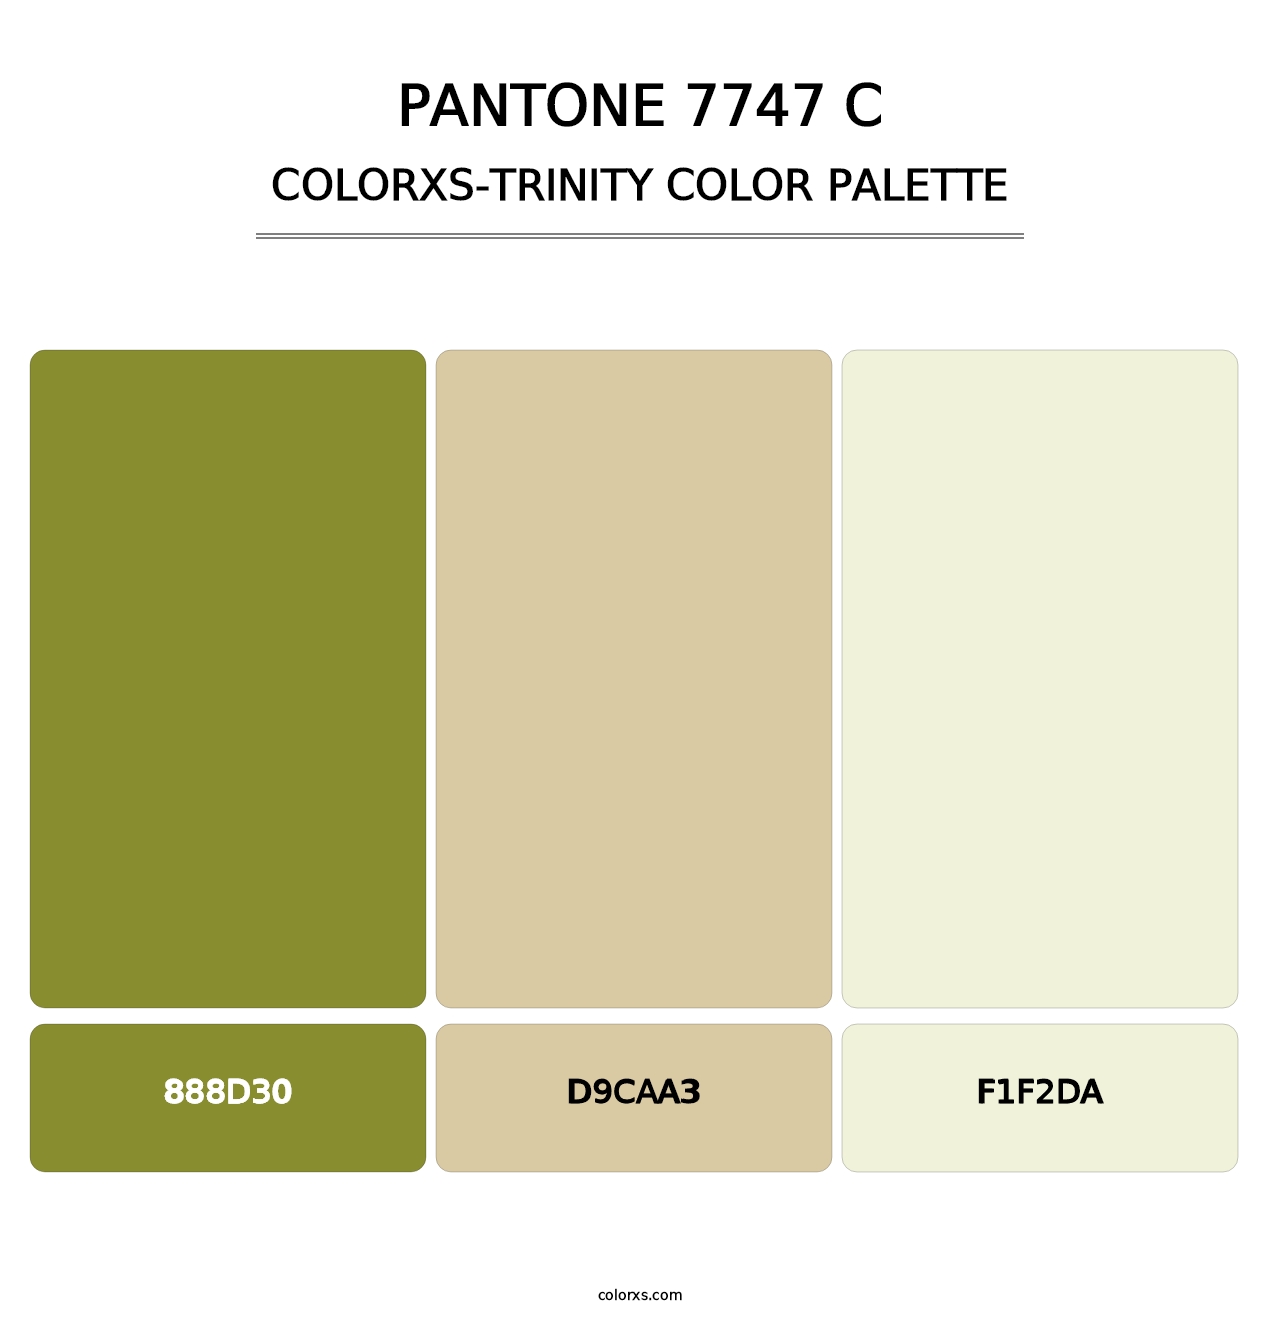 PANTONE 7747 C - Colorxs Trinity Palette